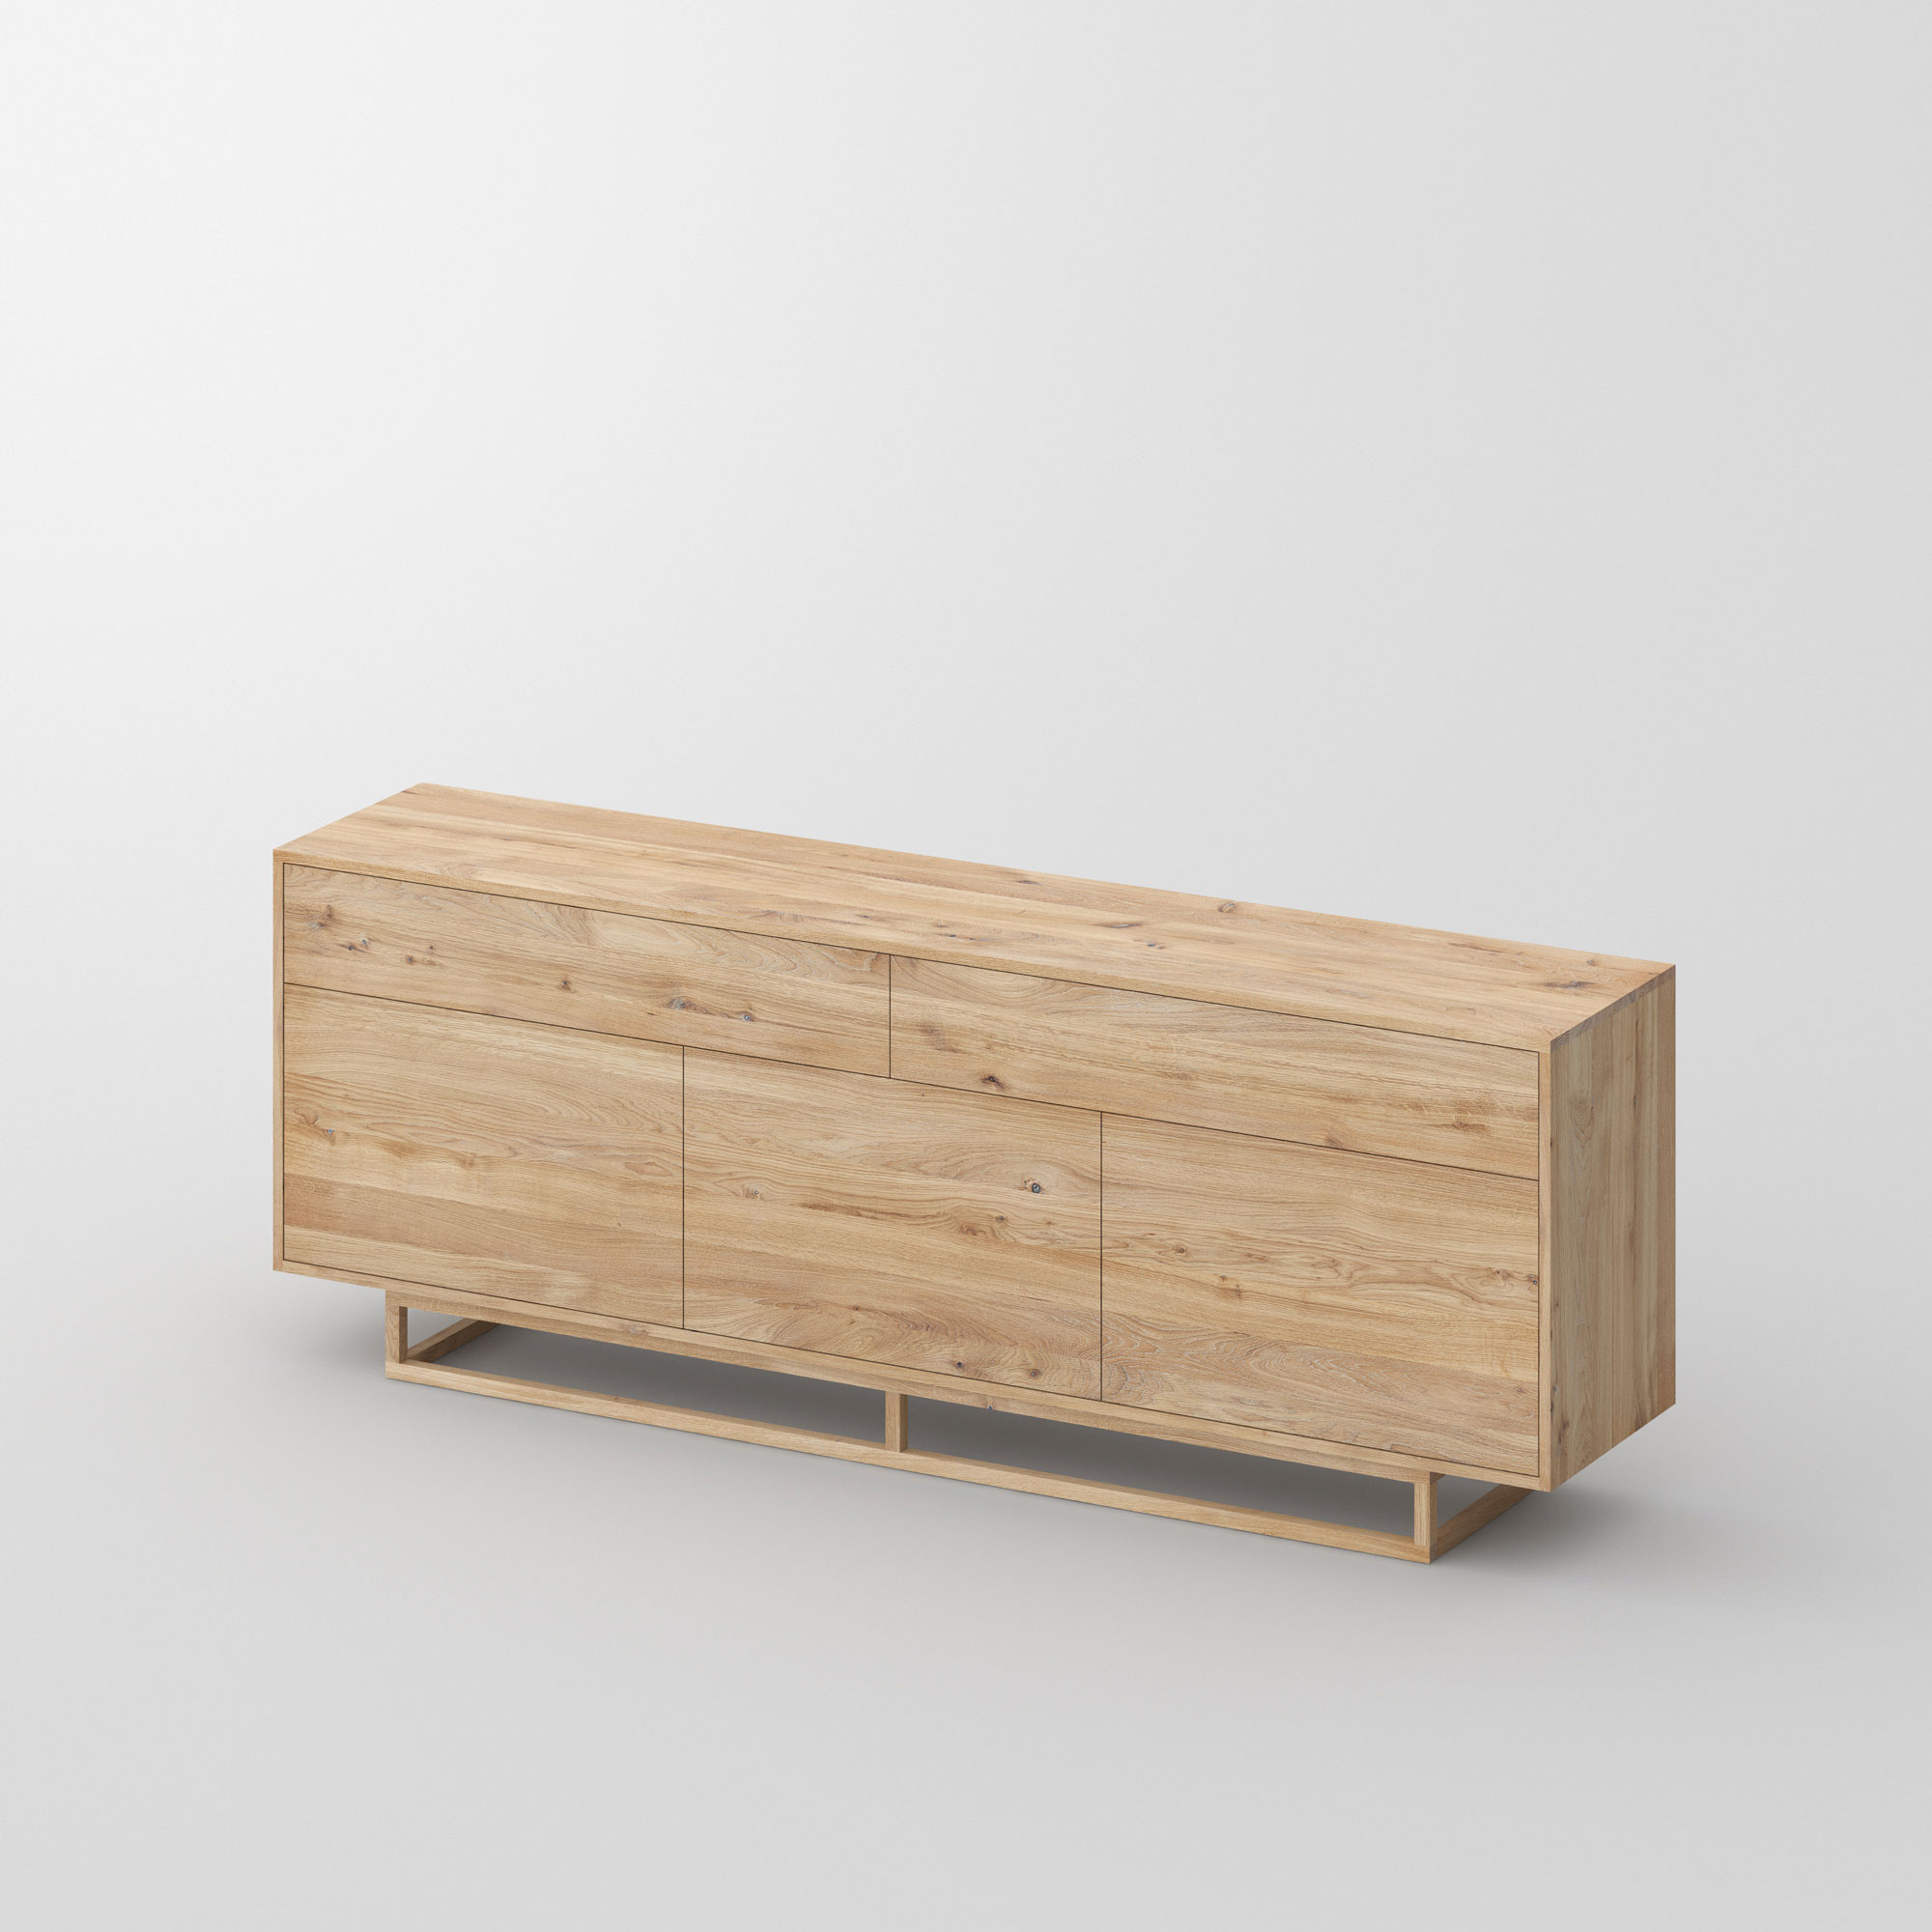 Wooden Designer Sideboard LINEA cam1 custom made in solid wood by vitamin design